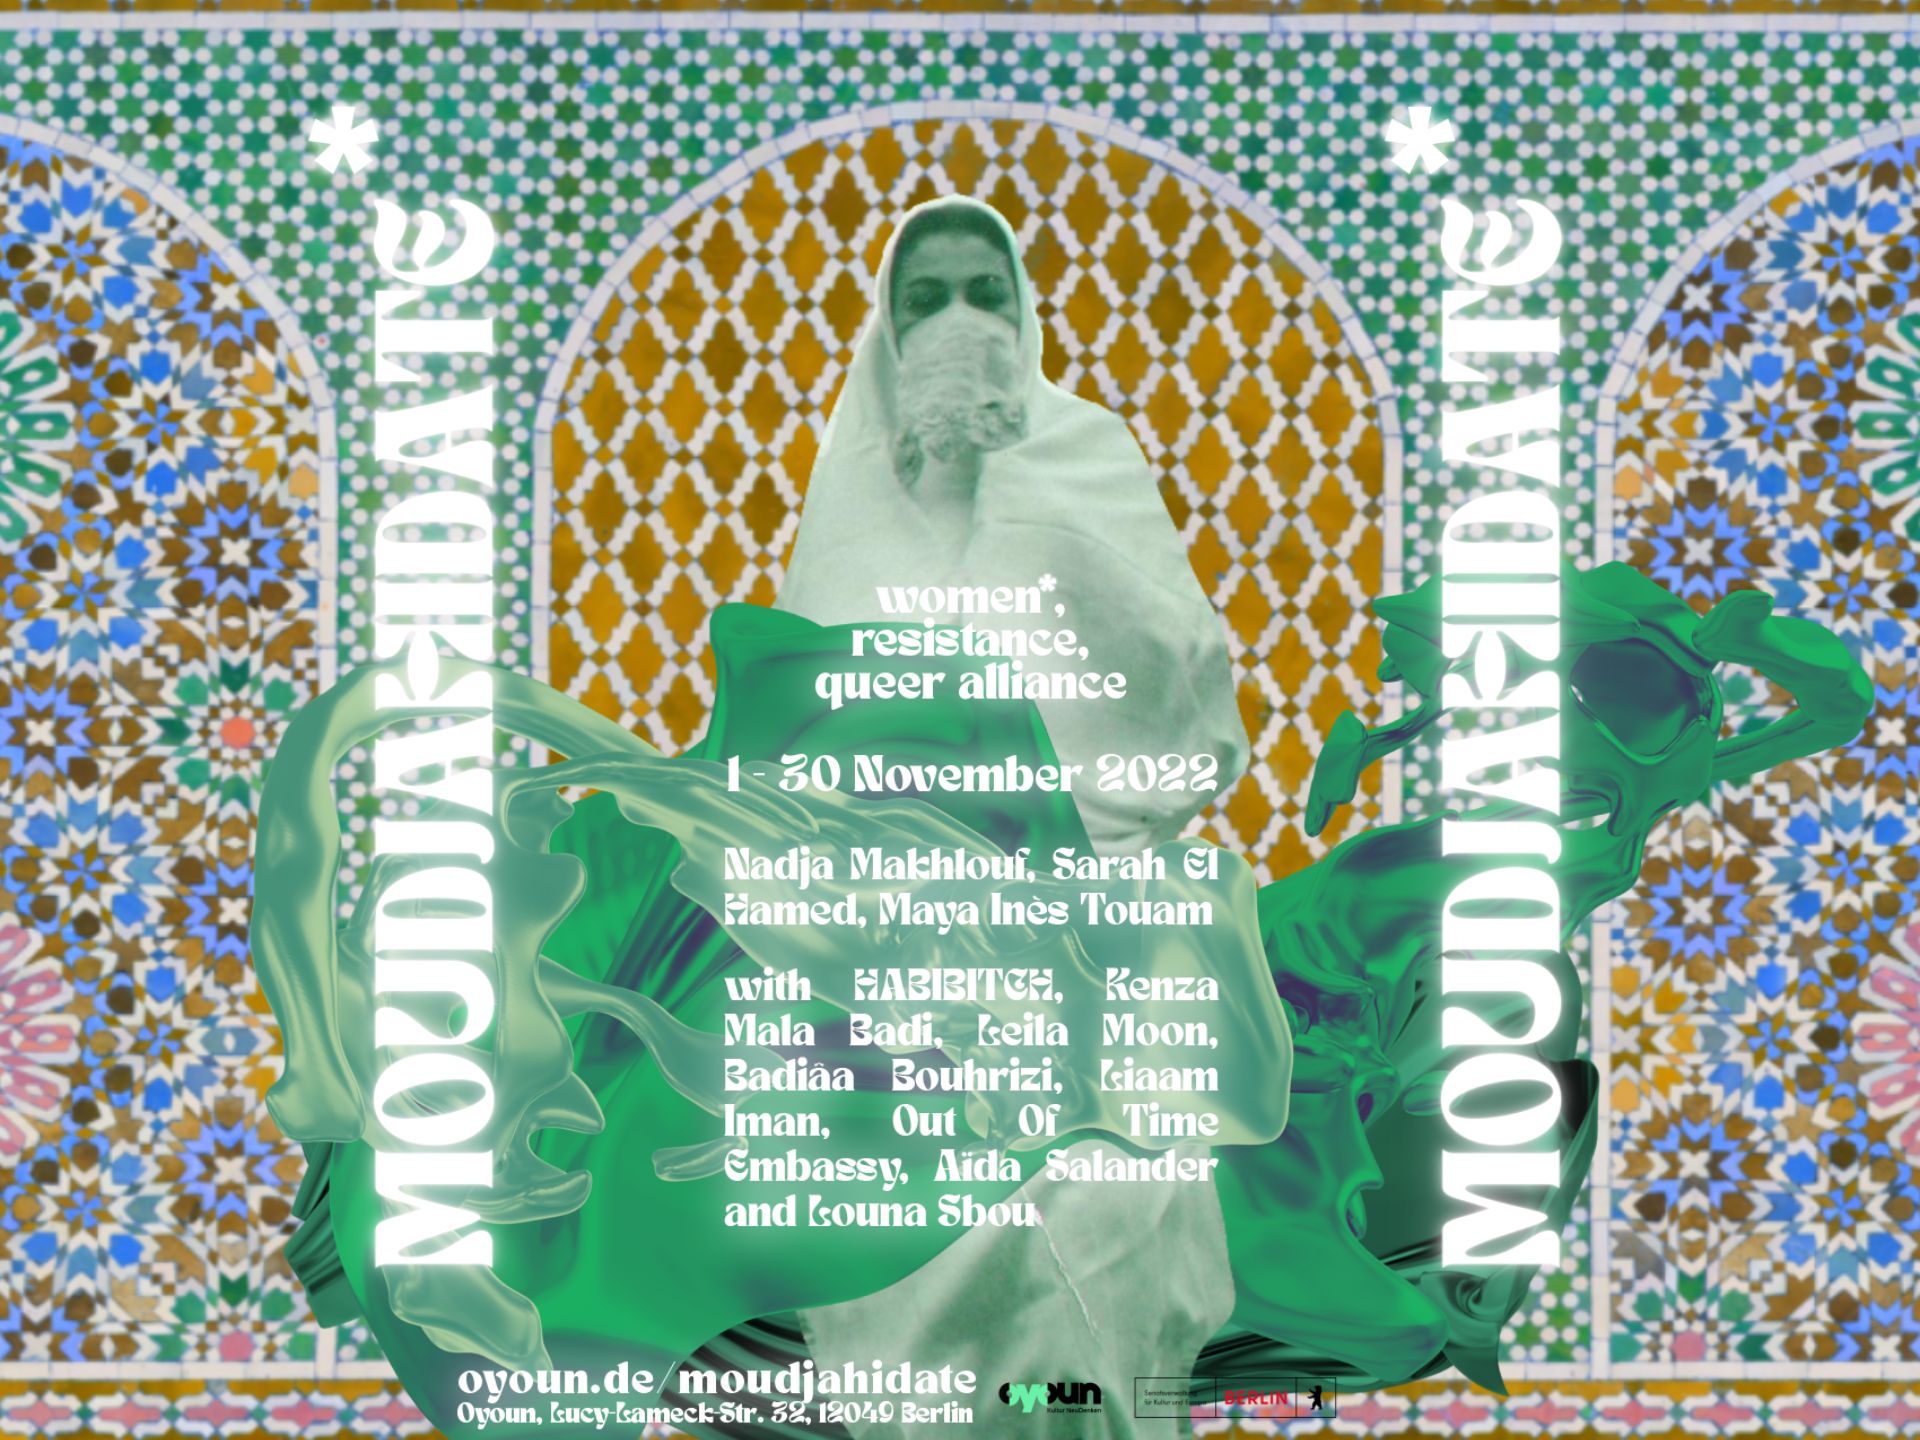 Ausstellung | Moudjahidate* – women*, resistance, queer alliance